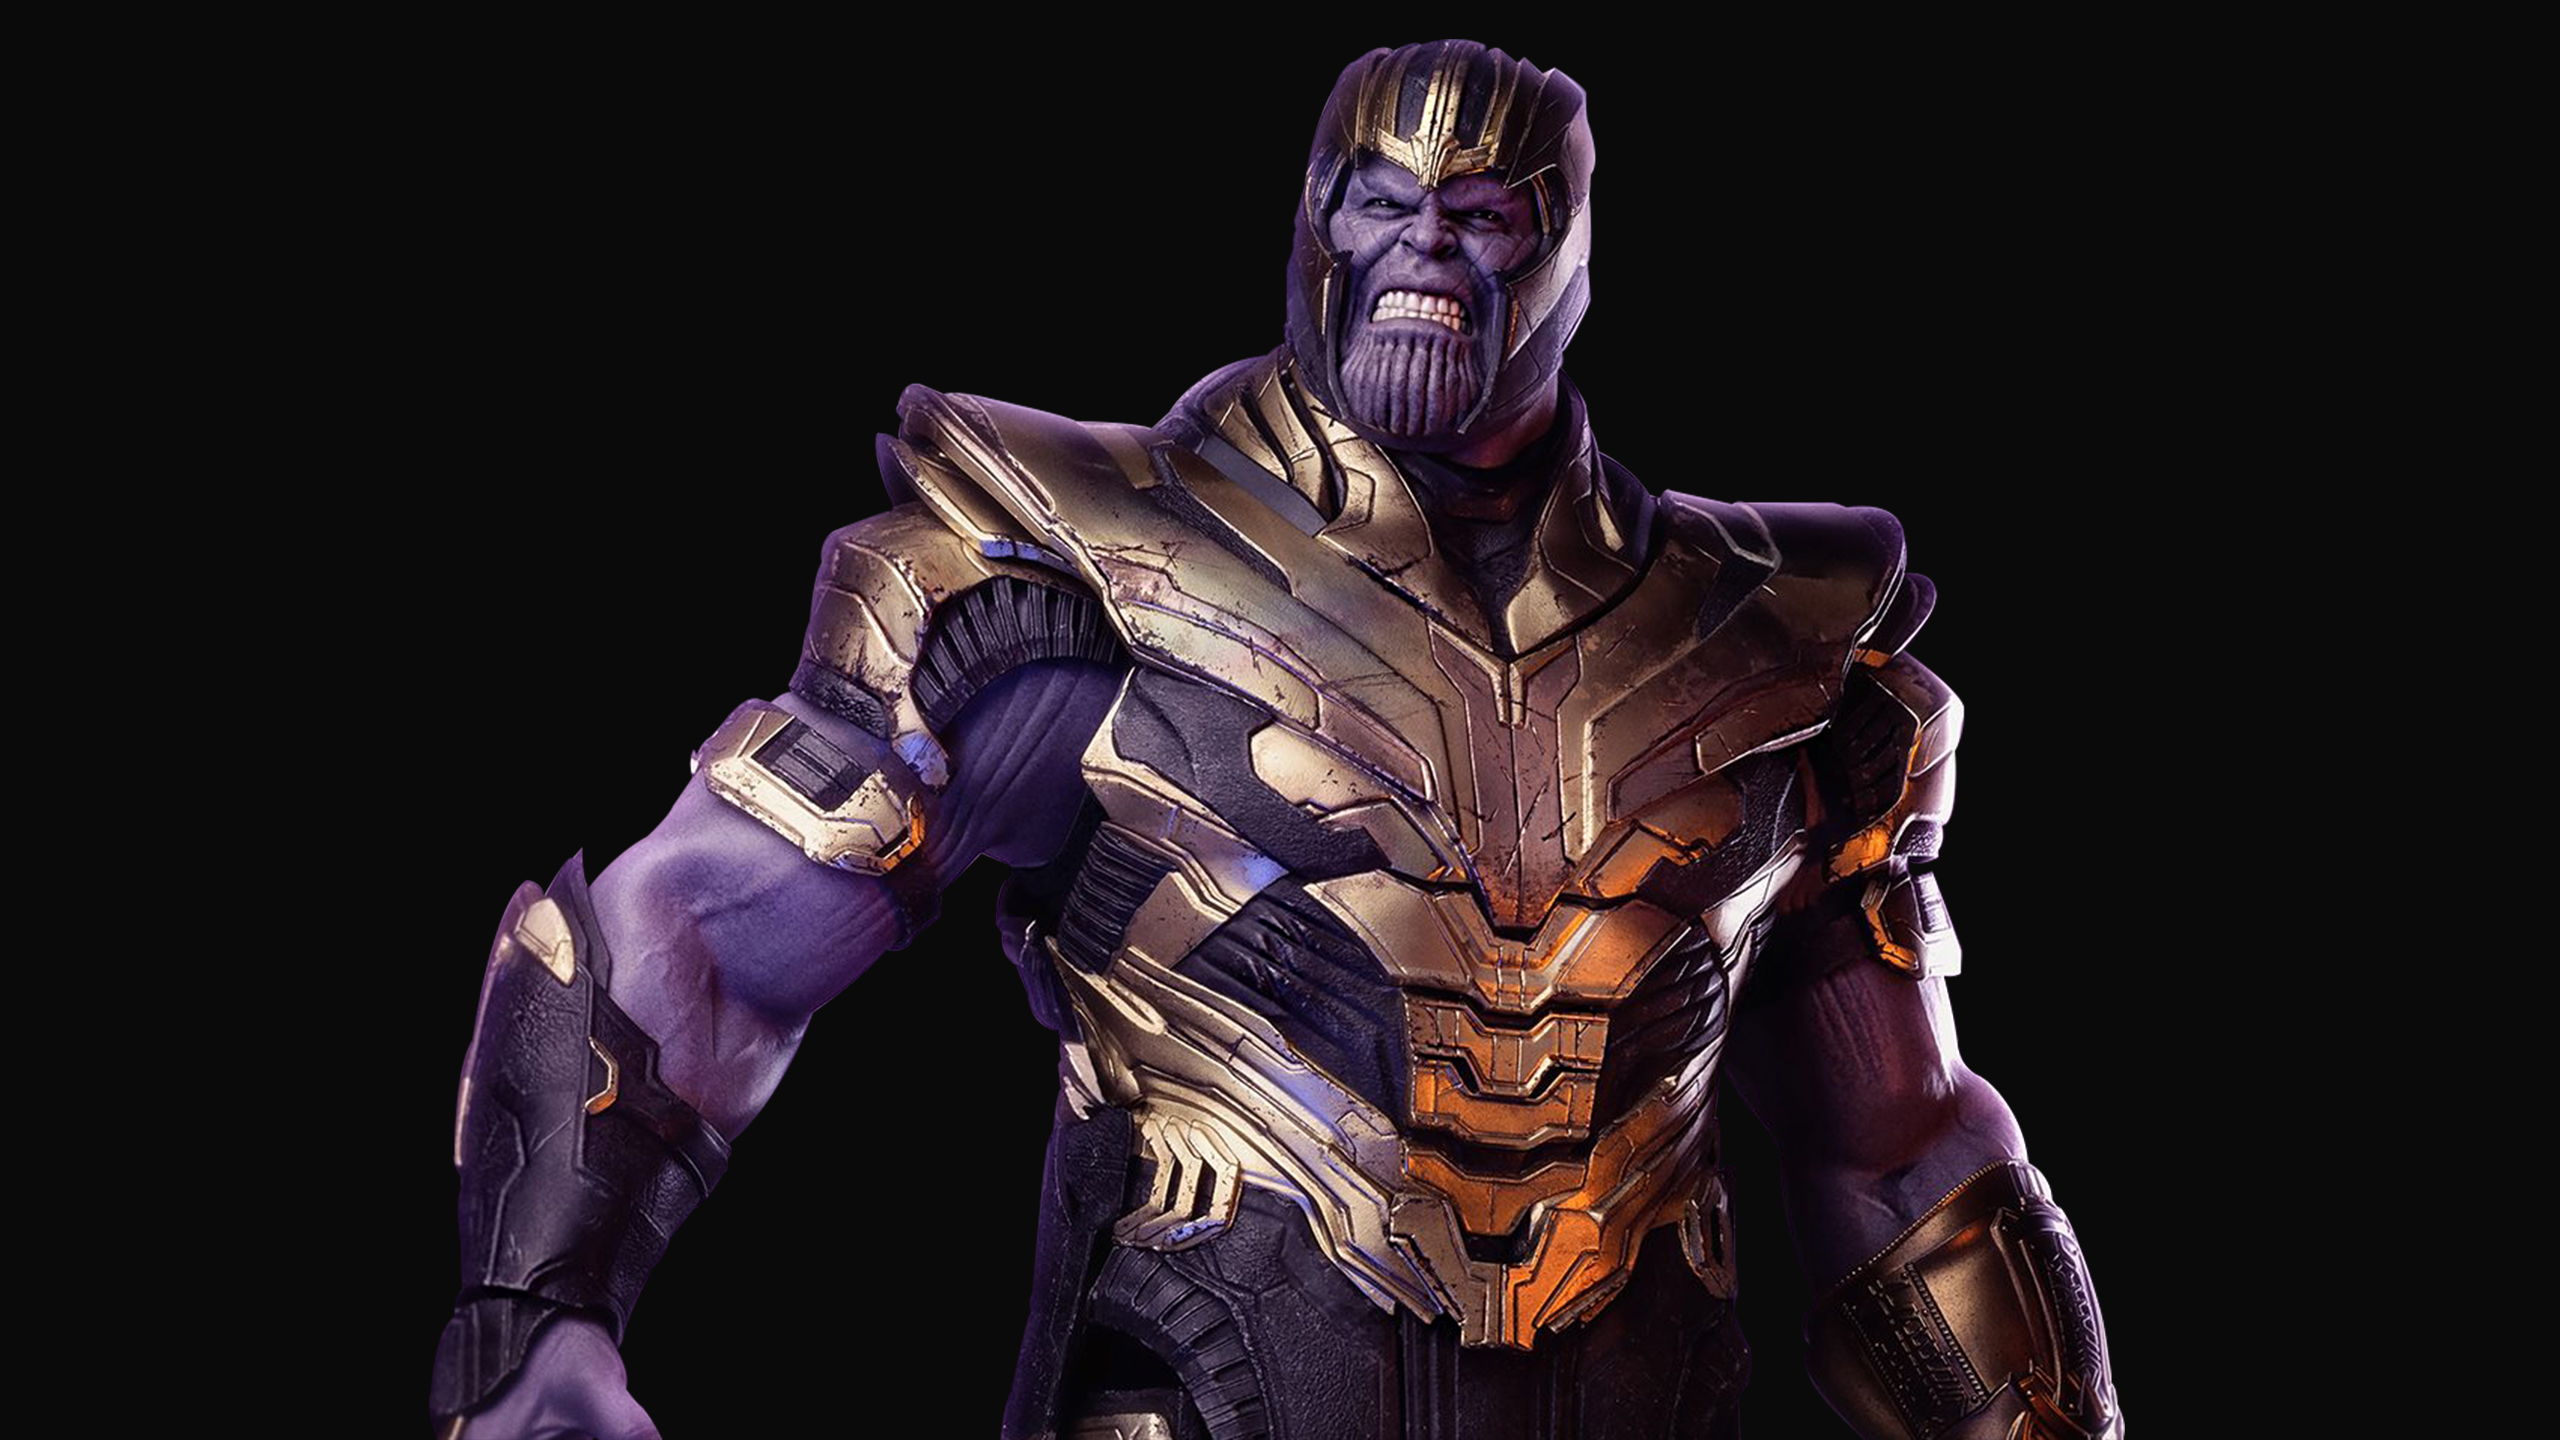  Thanos  in Avengers Endgame Wallpaper  HD  Movies 4K  